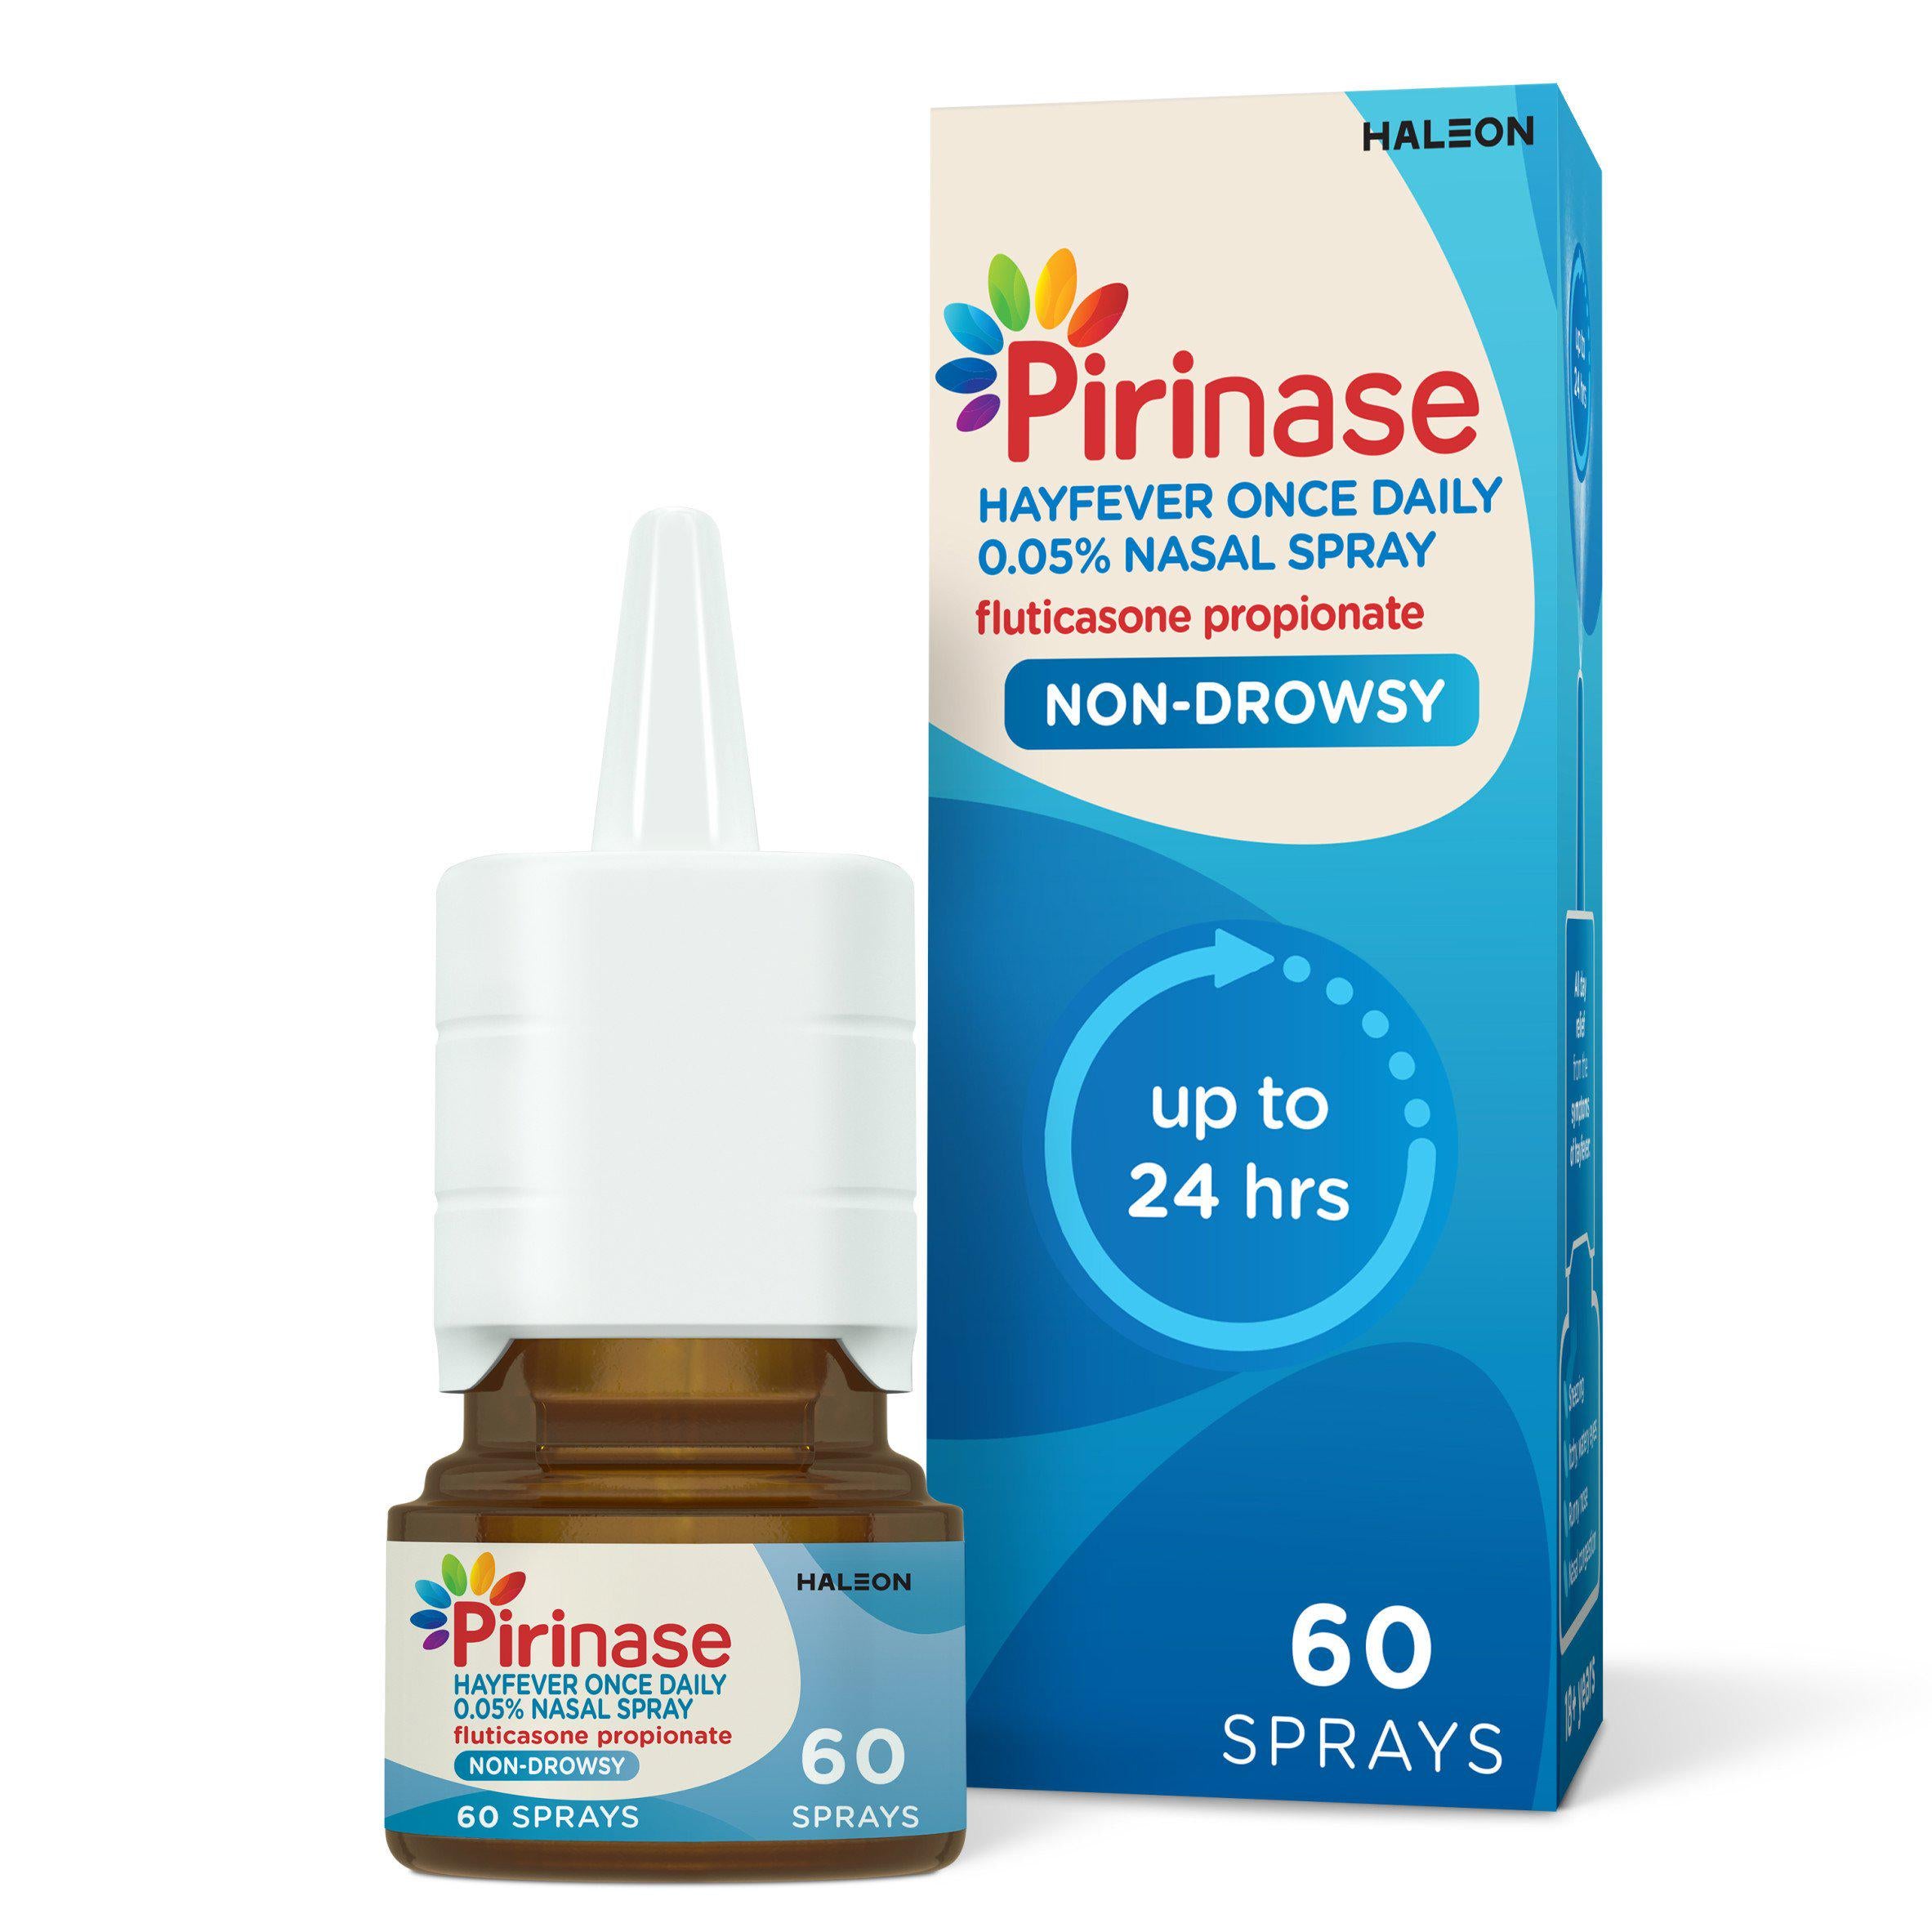 Pirinase Hayfever Relief for Adults 0.05% Nasal Spray 60 Sprays Hayfever & ergy relief Sainsburys   